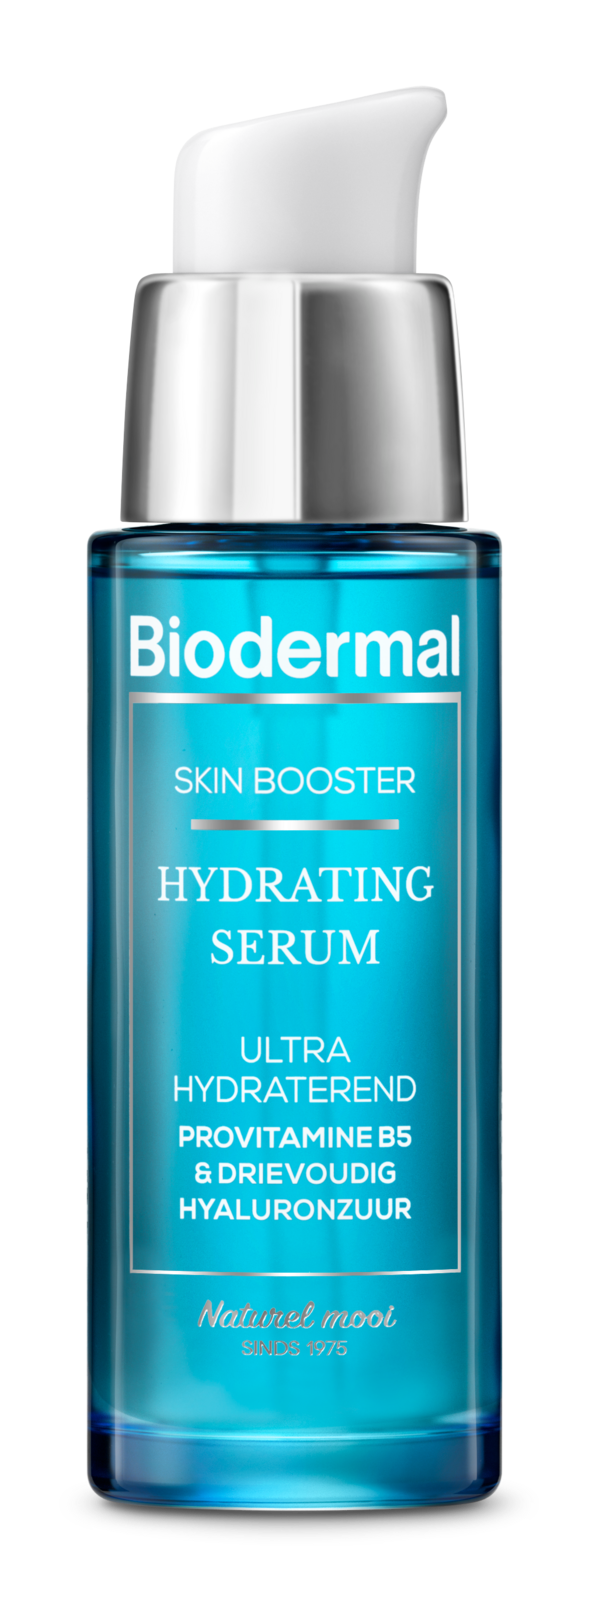 Biodermal Skin Booster Hydrating Serum